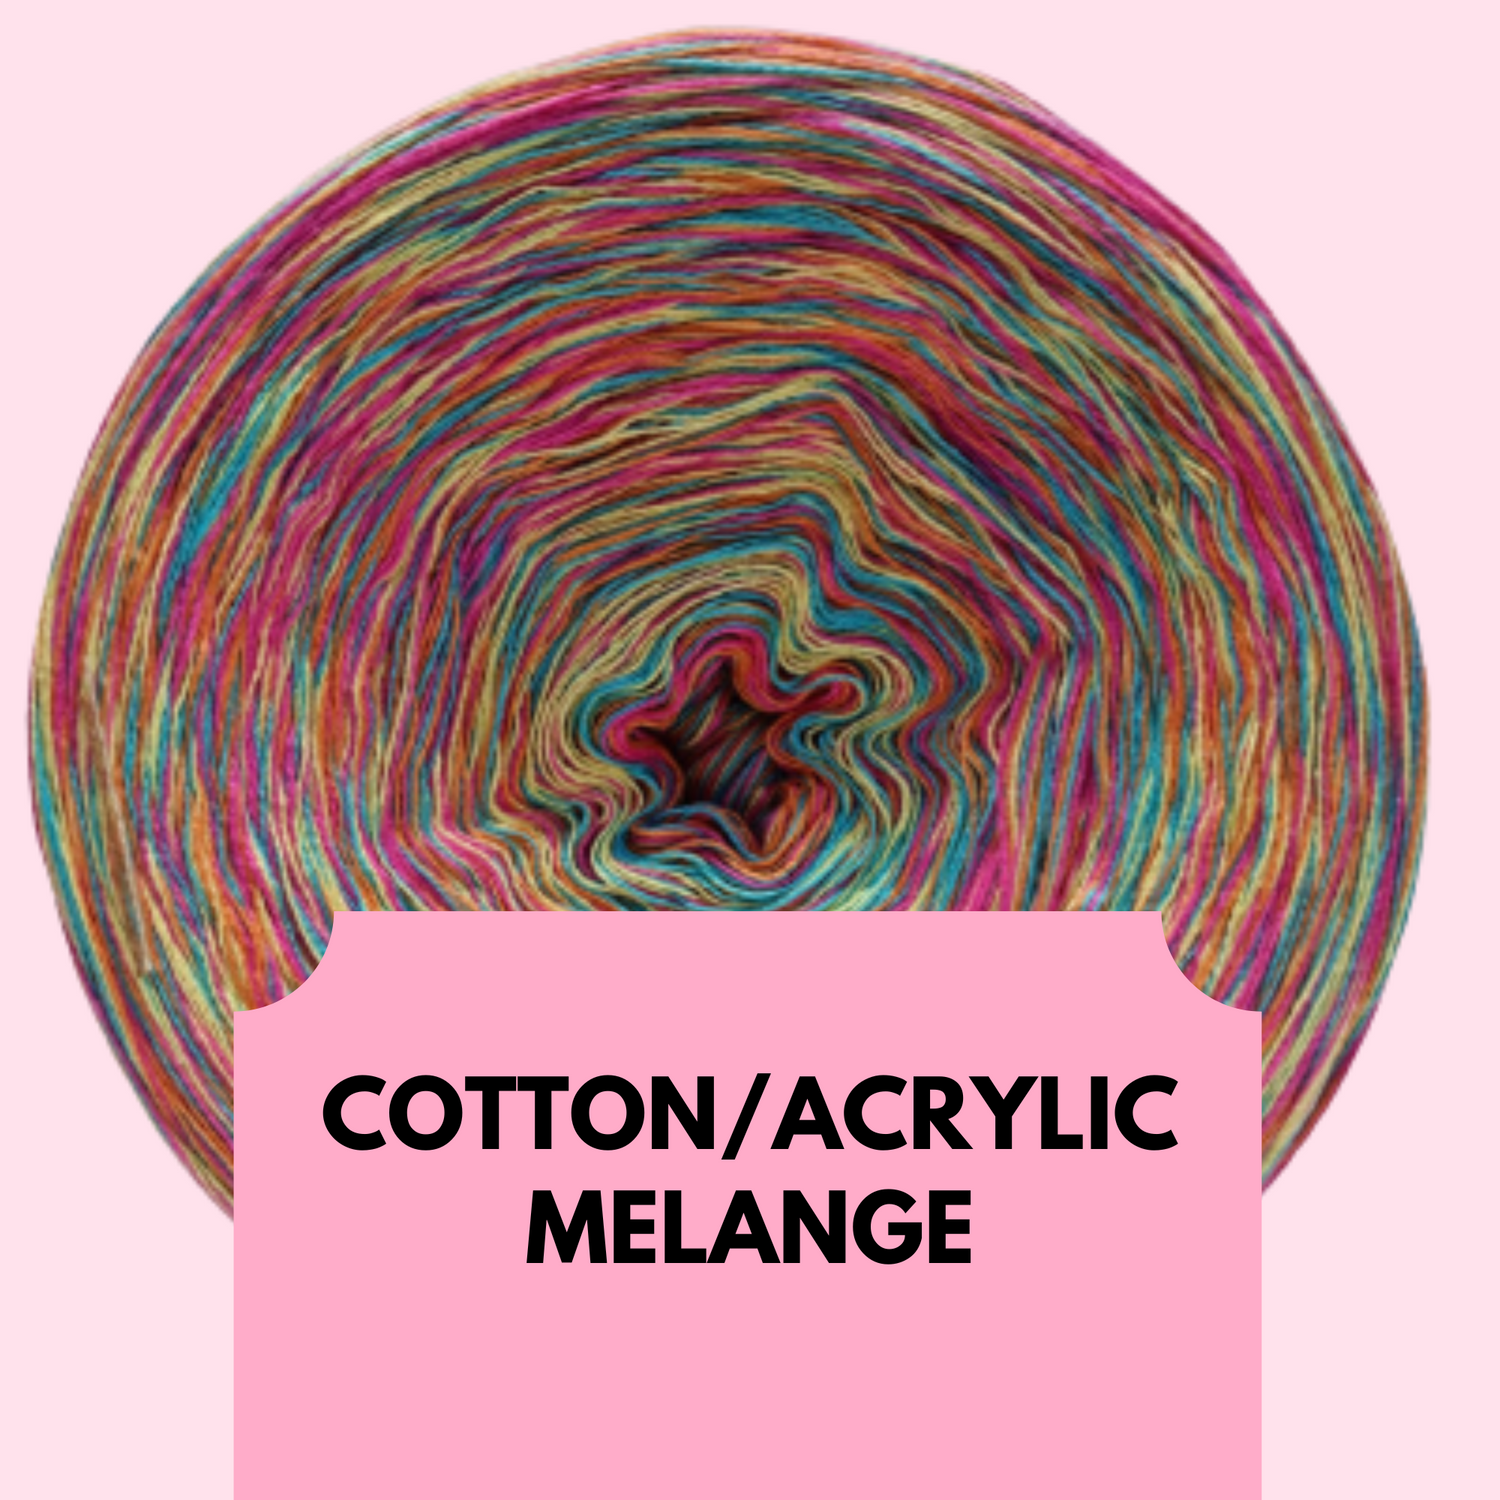 Cotton/Acrylic Melange Yarn